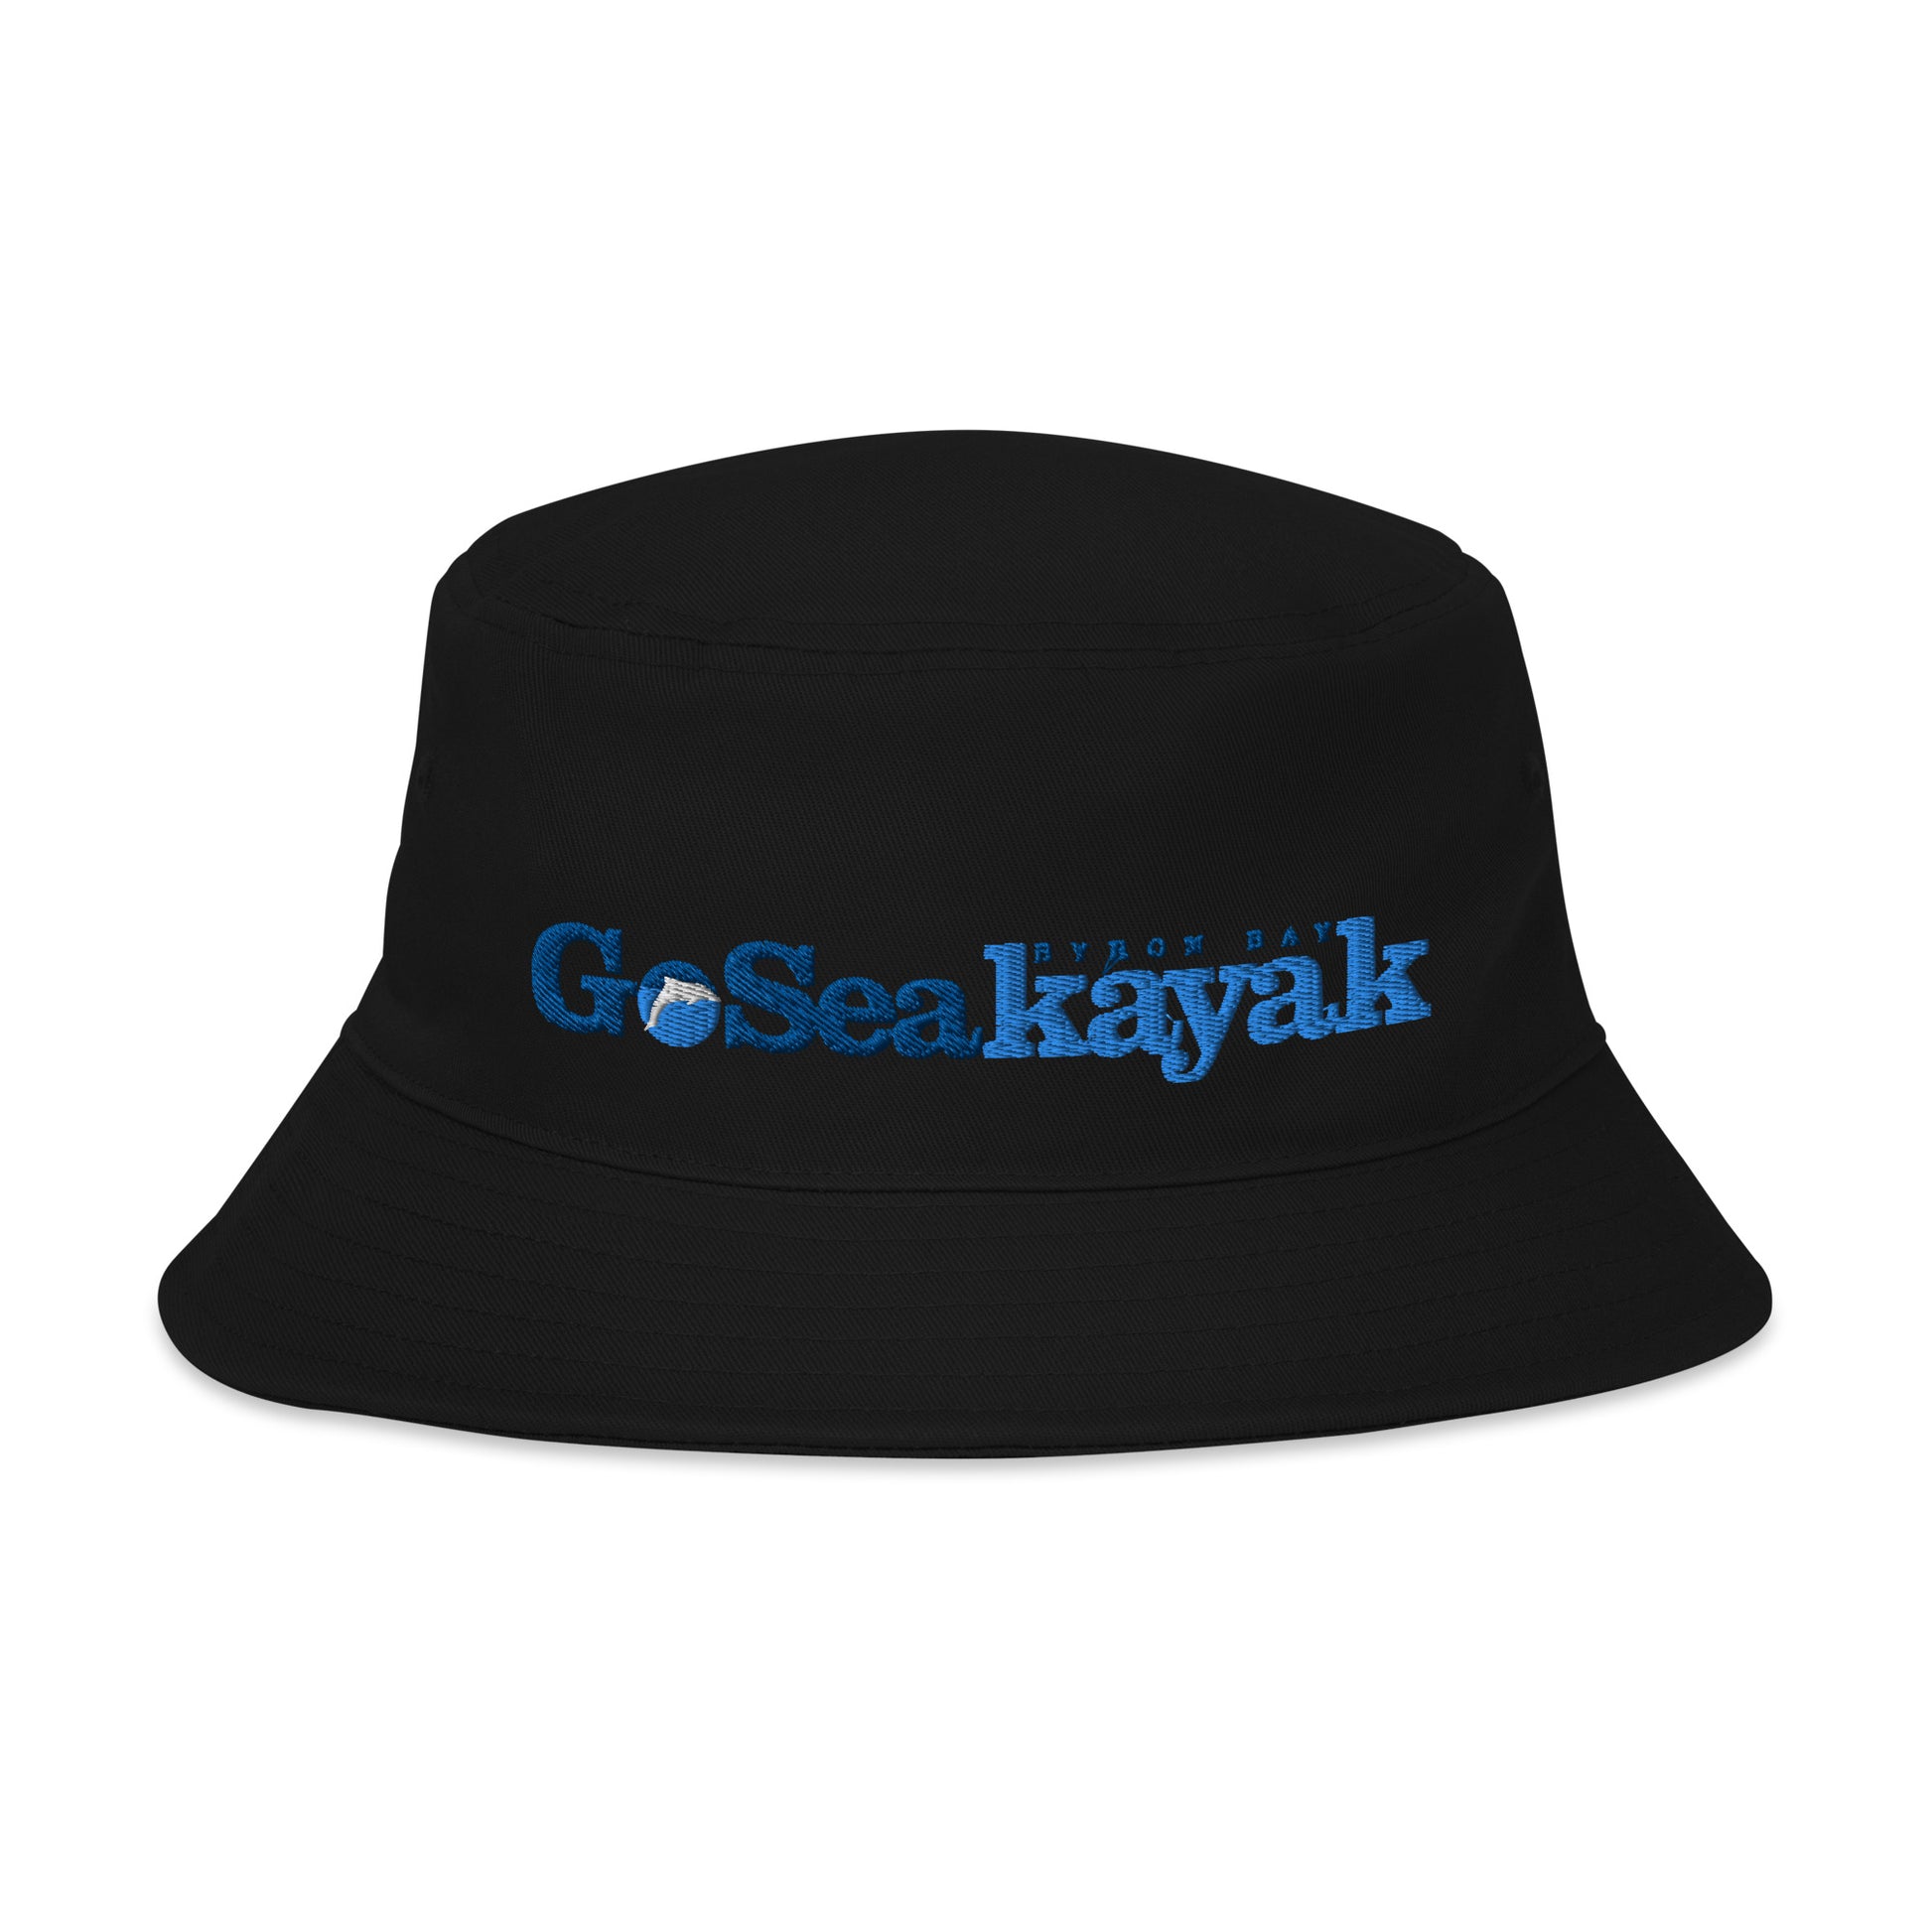  Unisex Bucket Hat - Black - Front view - Go Sea Kayak Byron Bay logo on front  - Genuine Byron Bay Merchandise | Produced by Go Sea Kayak Byron Bay